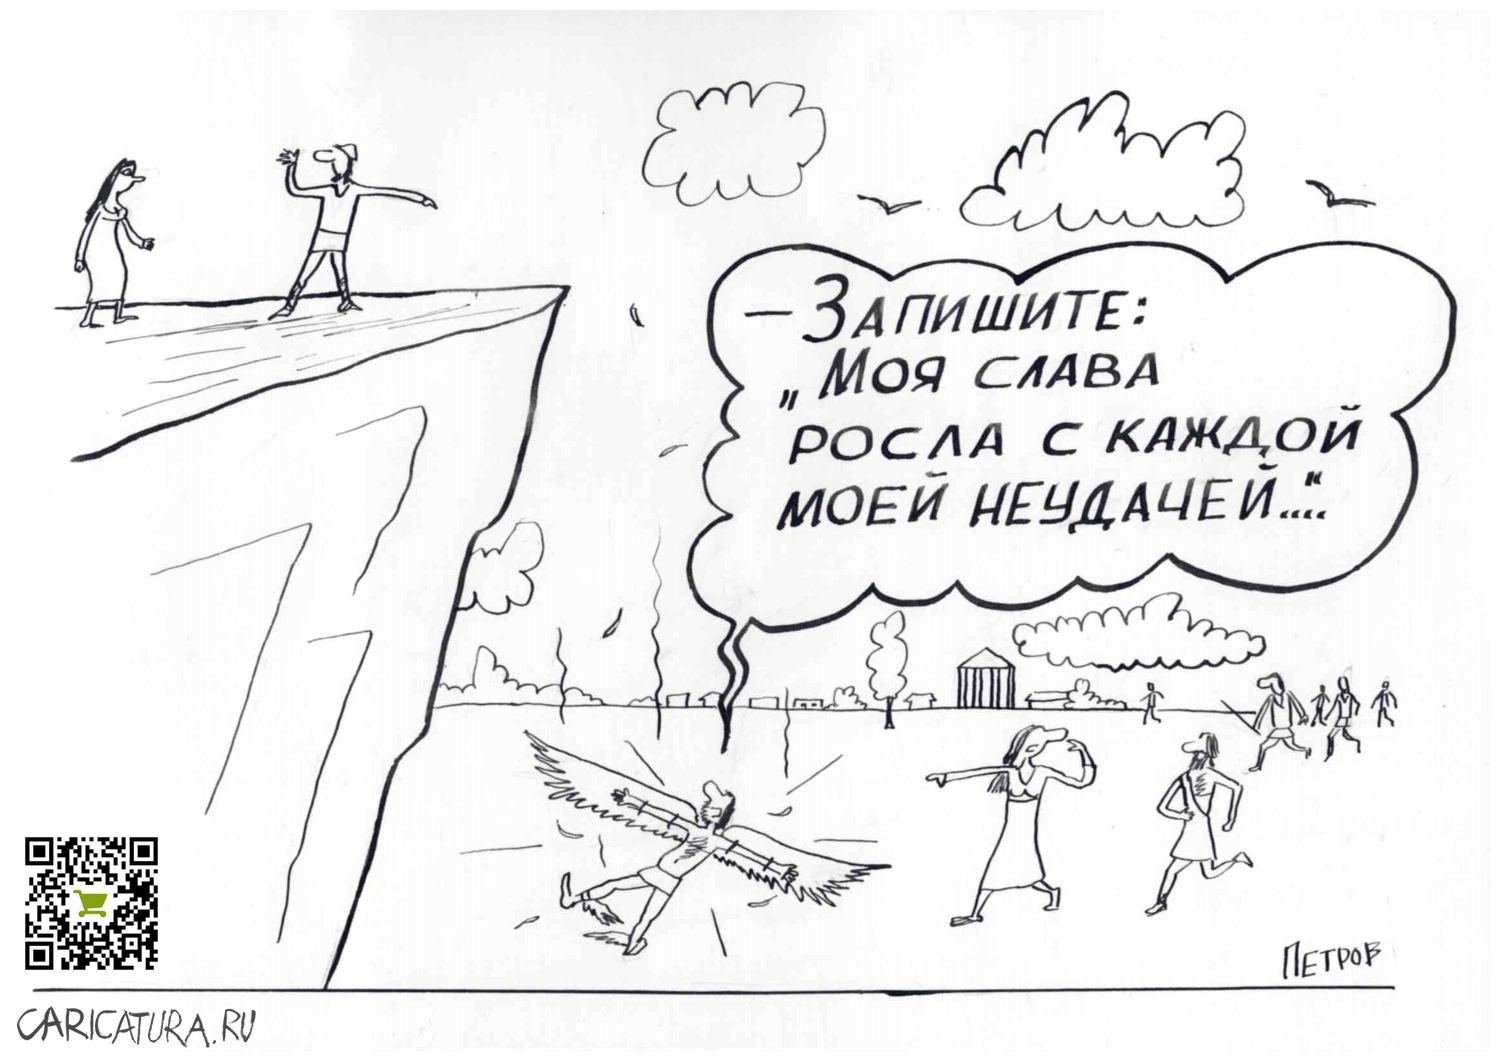 Карикатура "Икар", Александр Петров